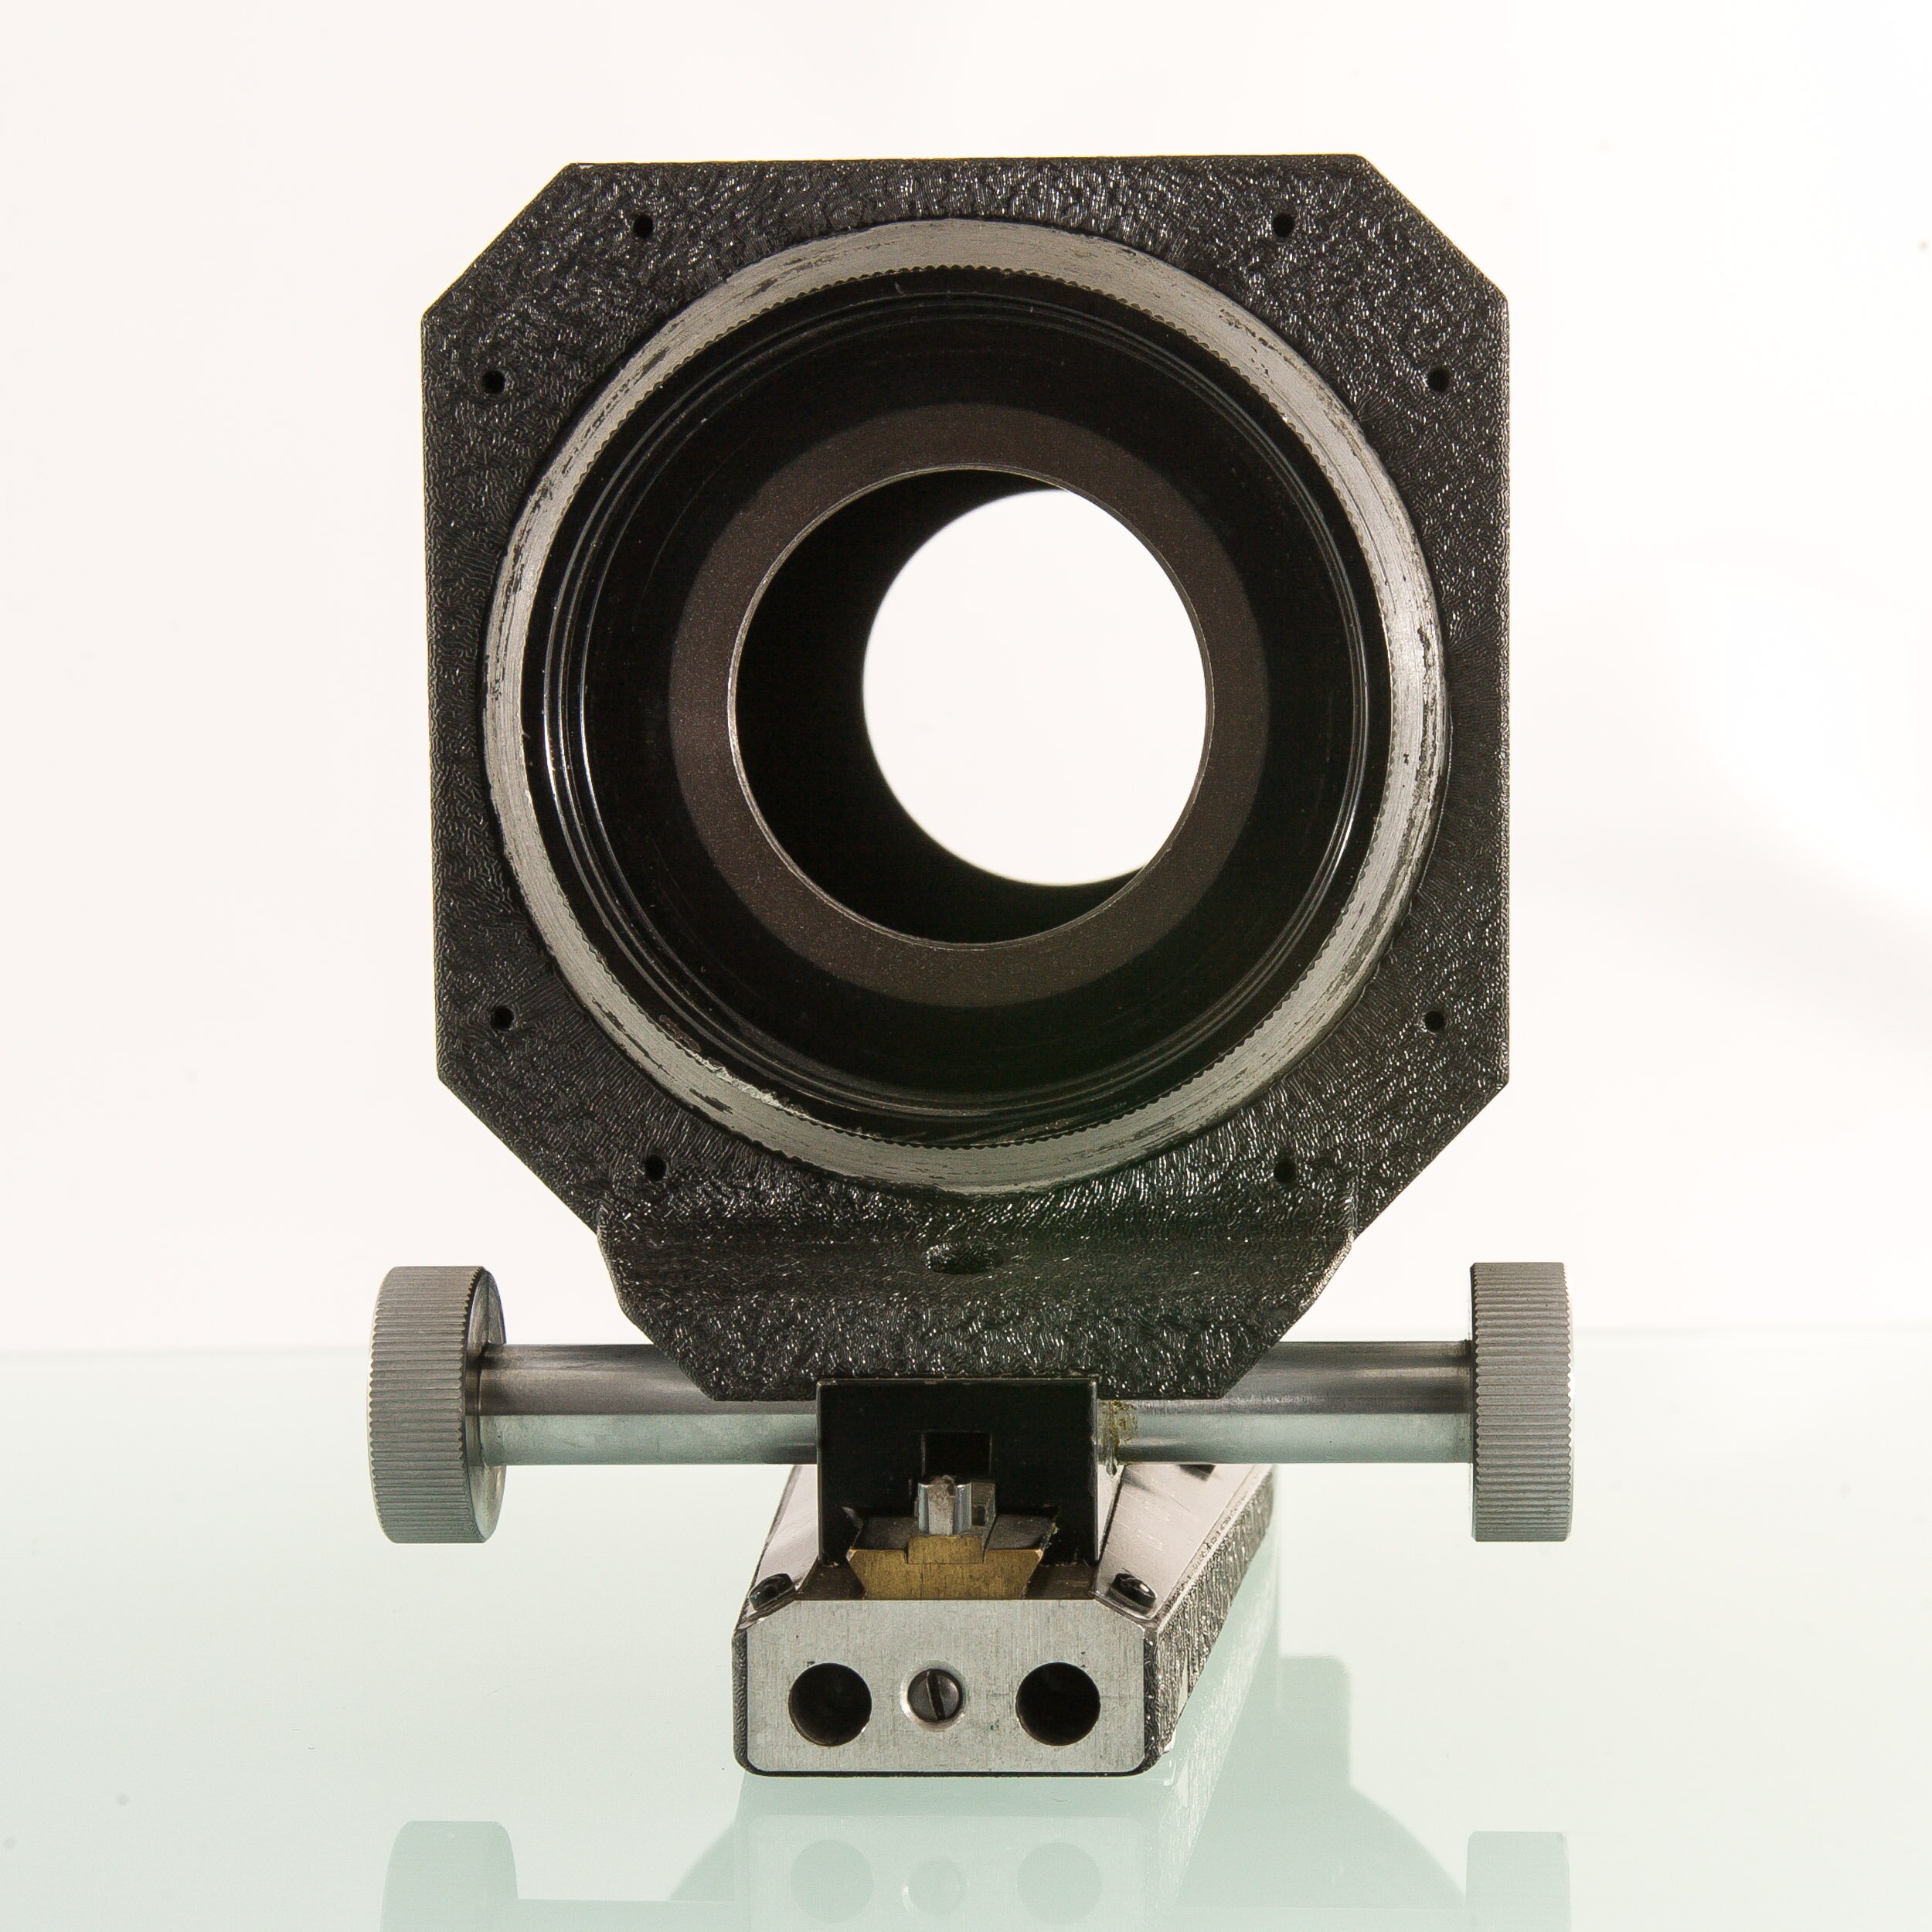 Leica M39 Balgengerät